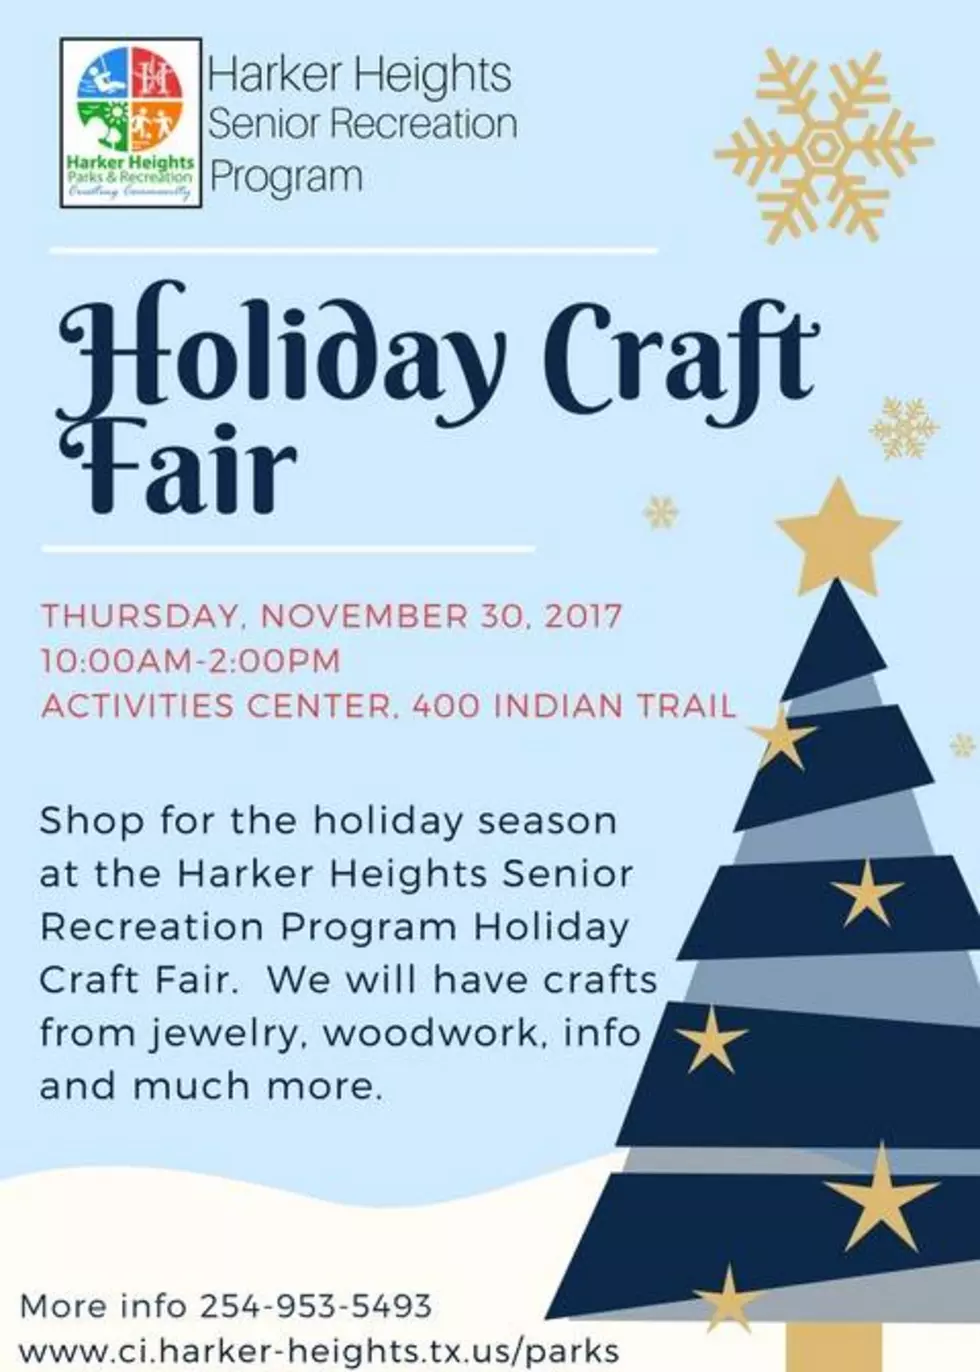 Harker Heights Senior Recreation Program Holiday Craft Fair